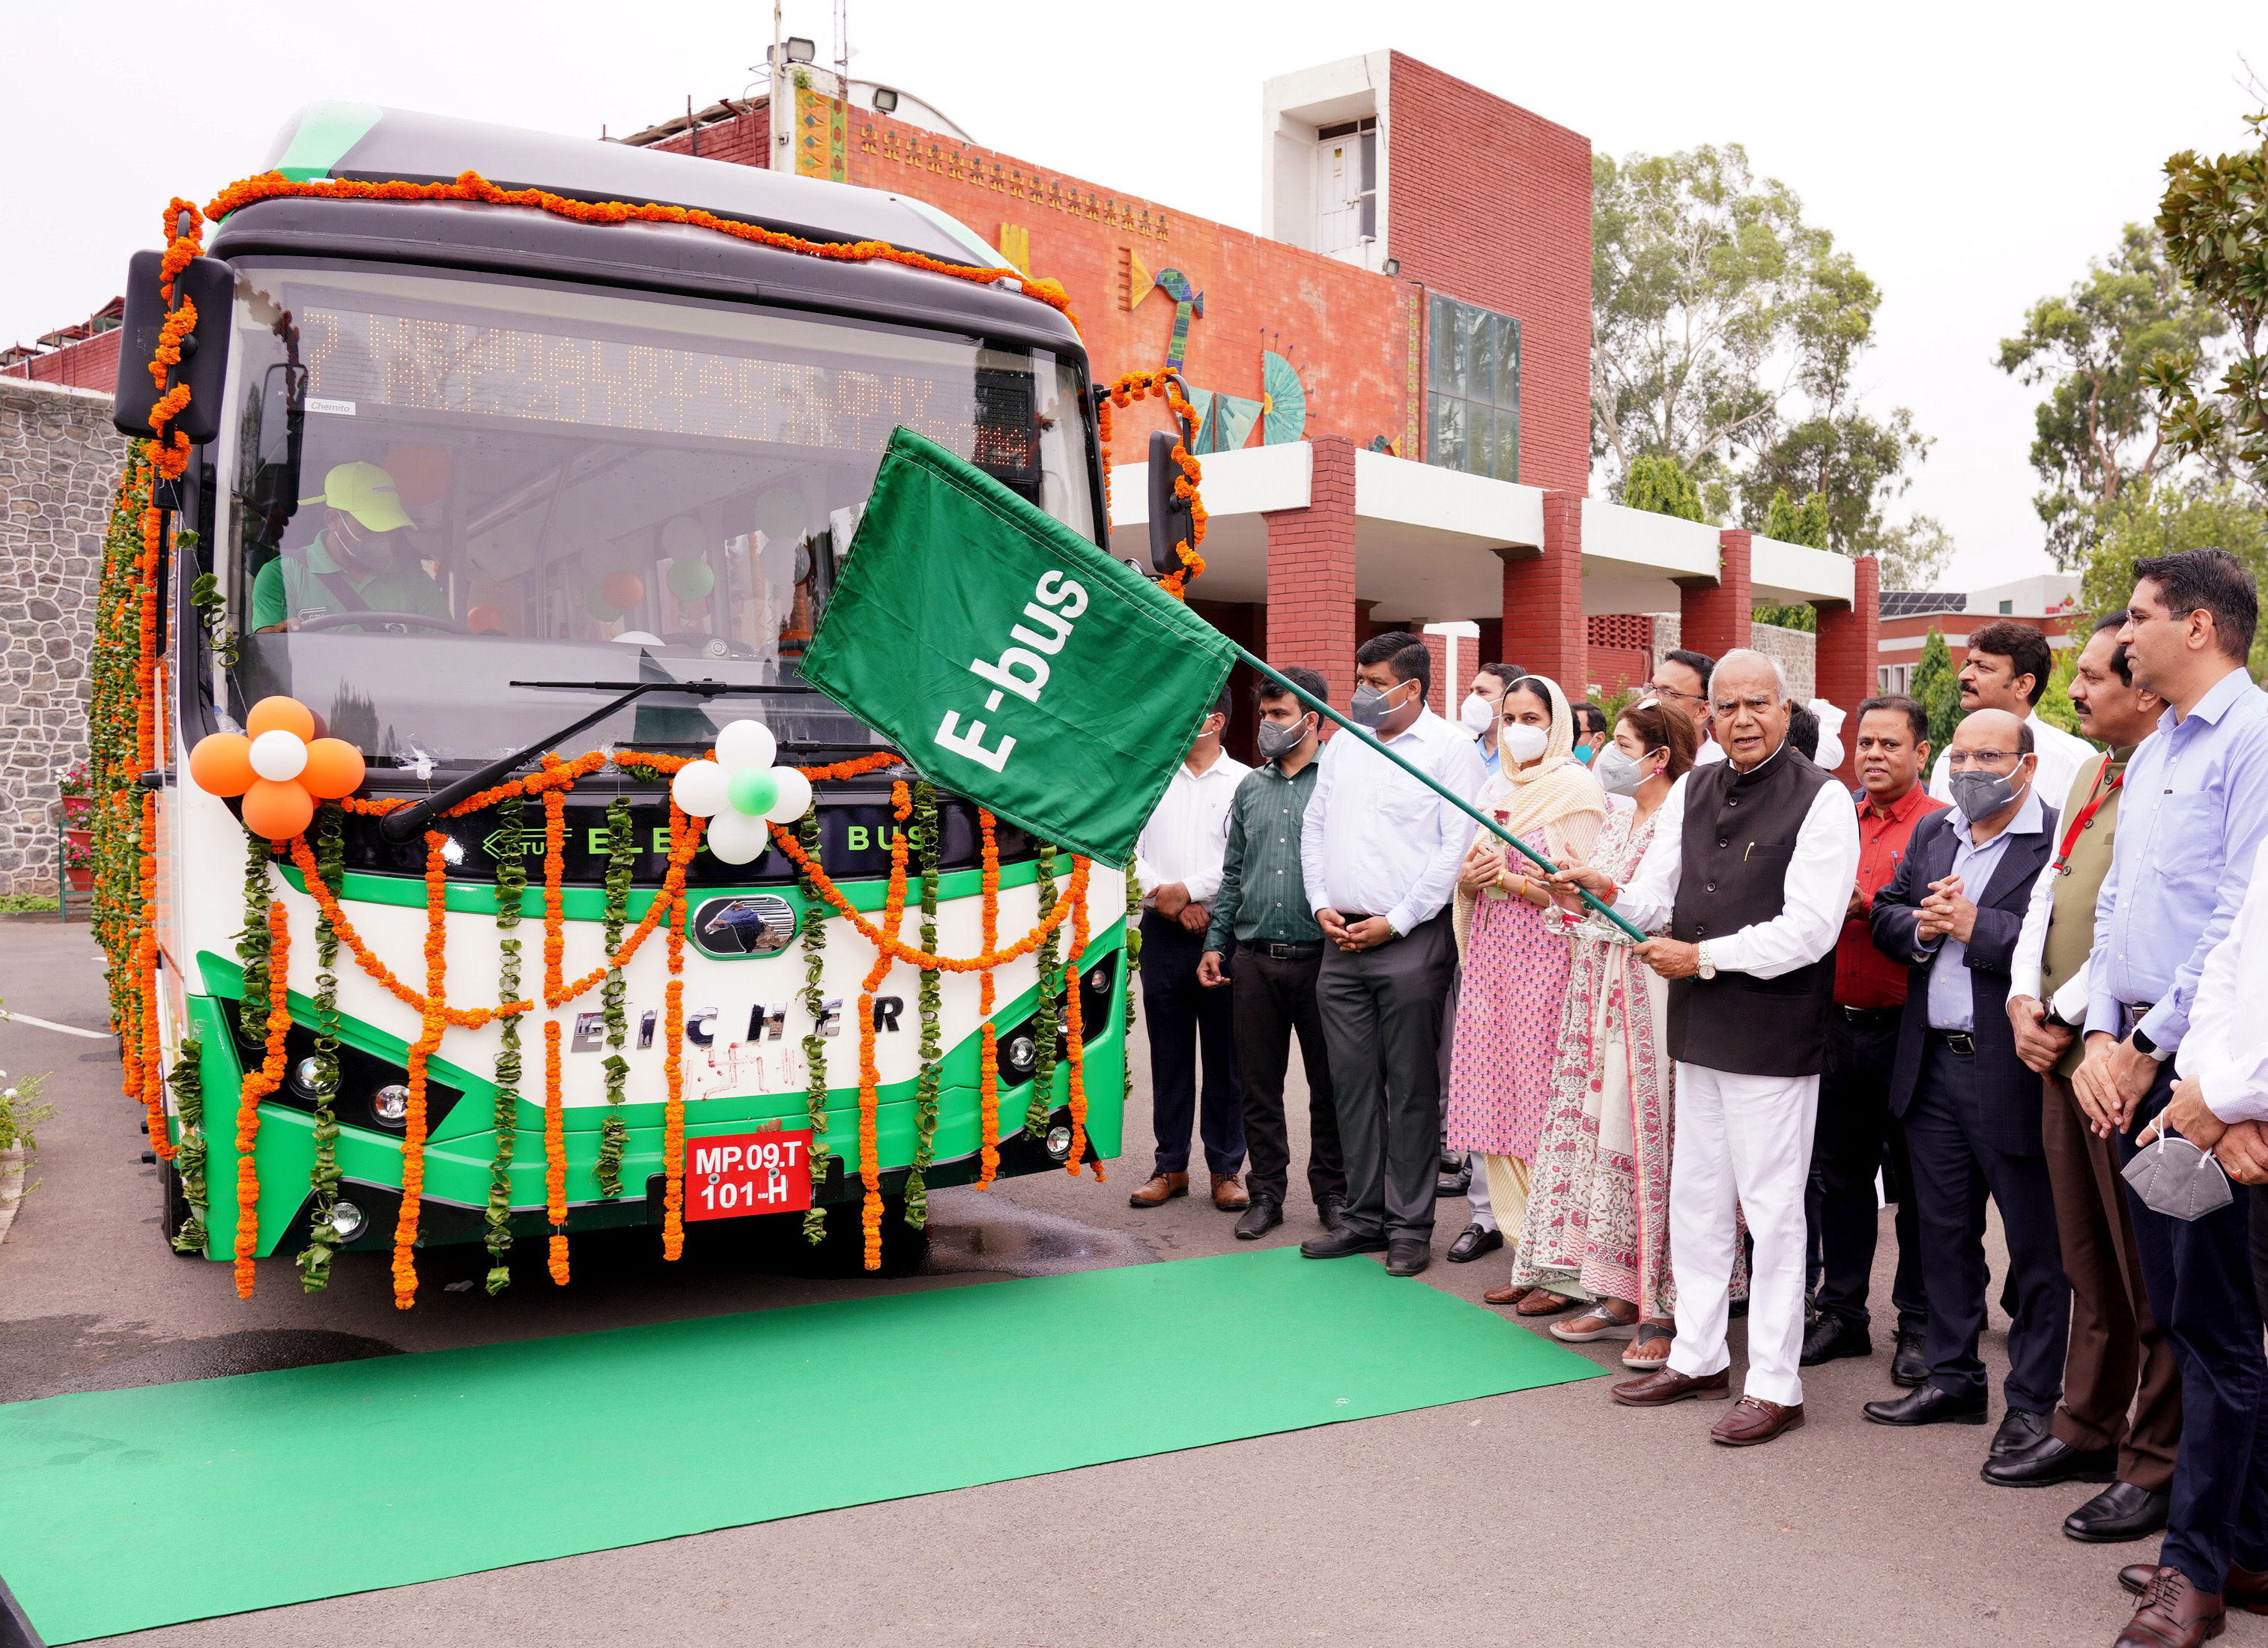 Chandigarh Transport Undertaking on the green move